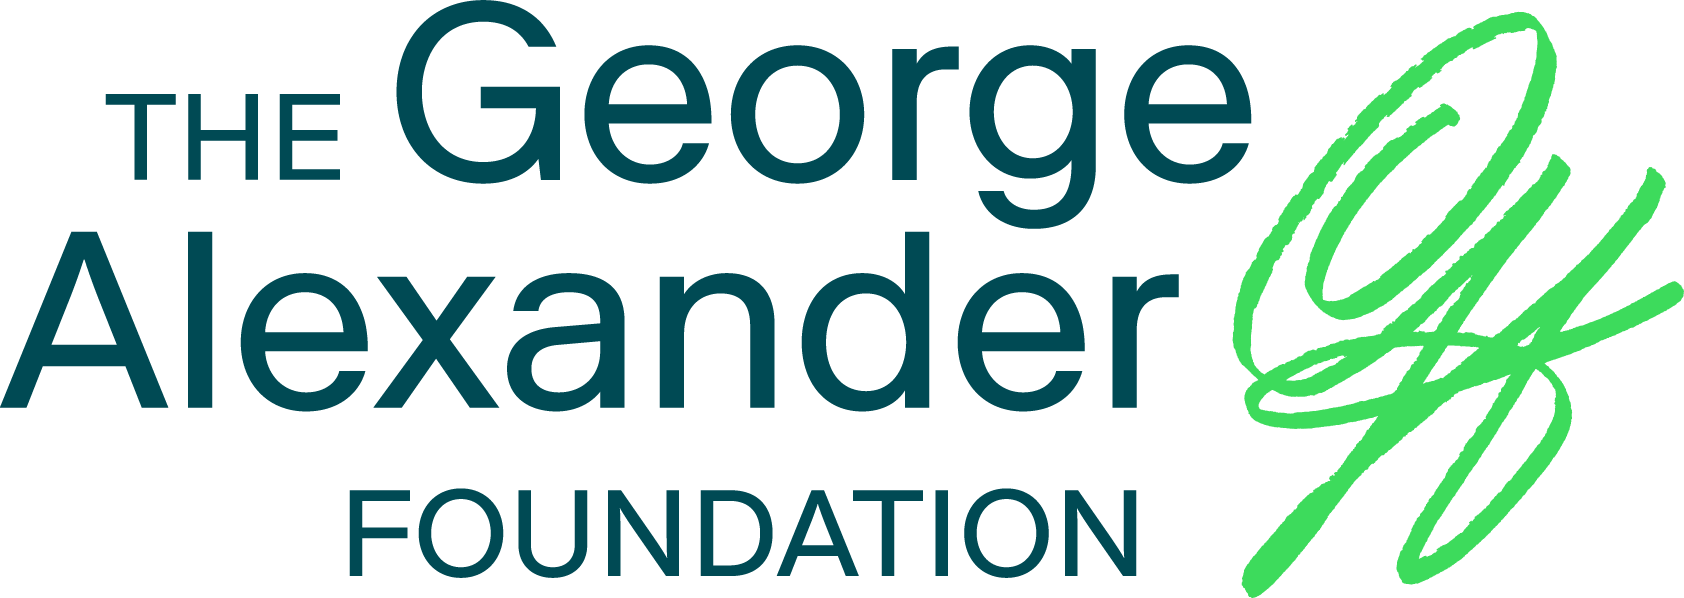 The George Alexander Foundation logo